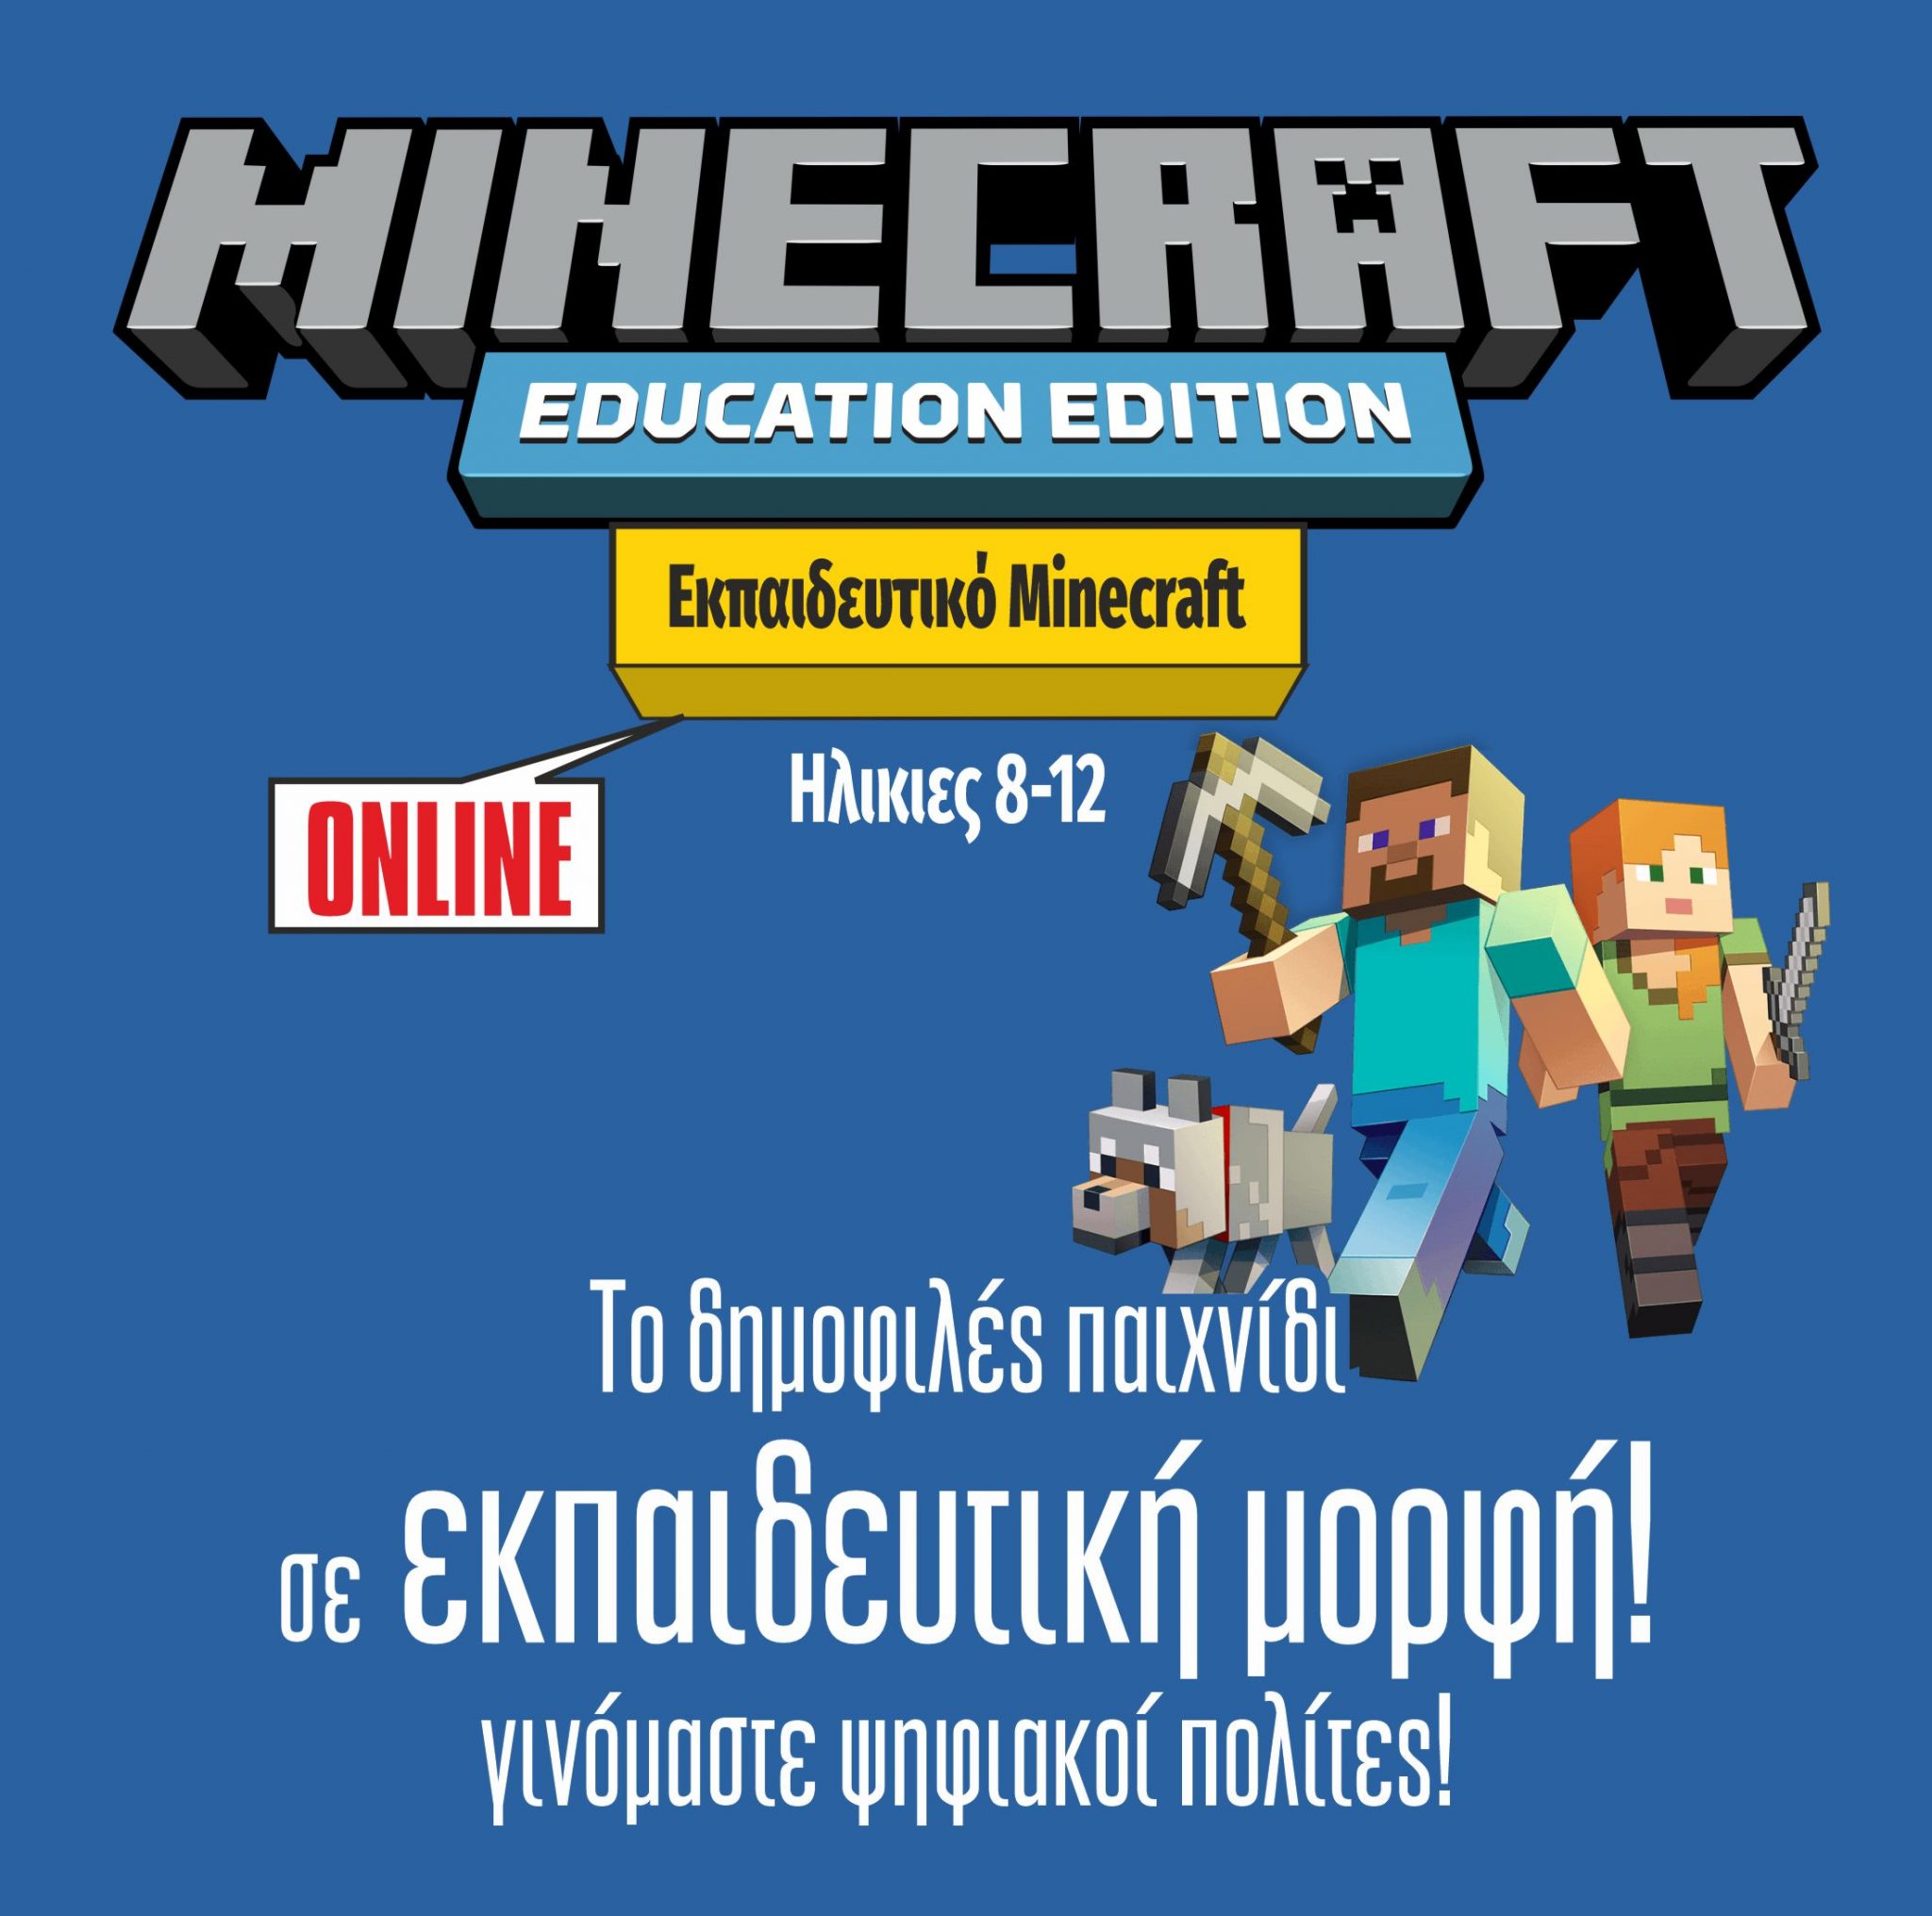 minecraft education download free online pl